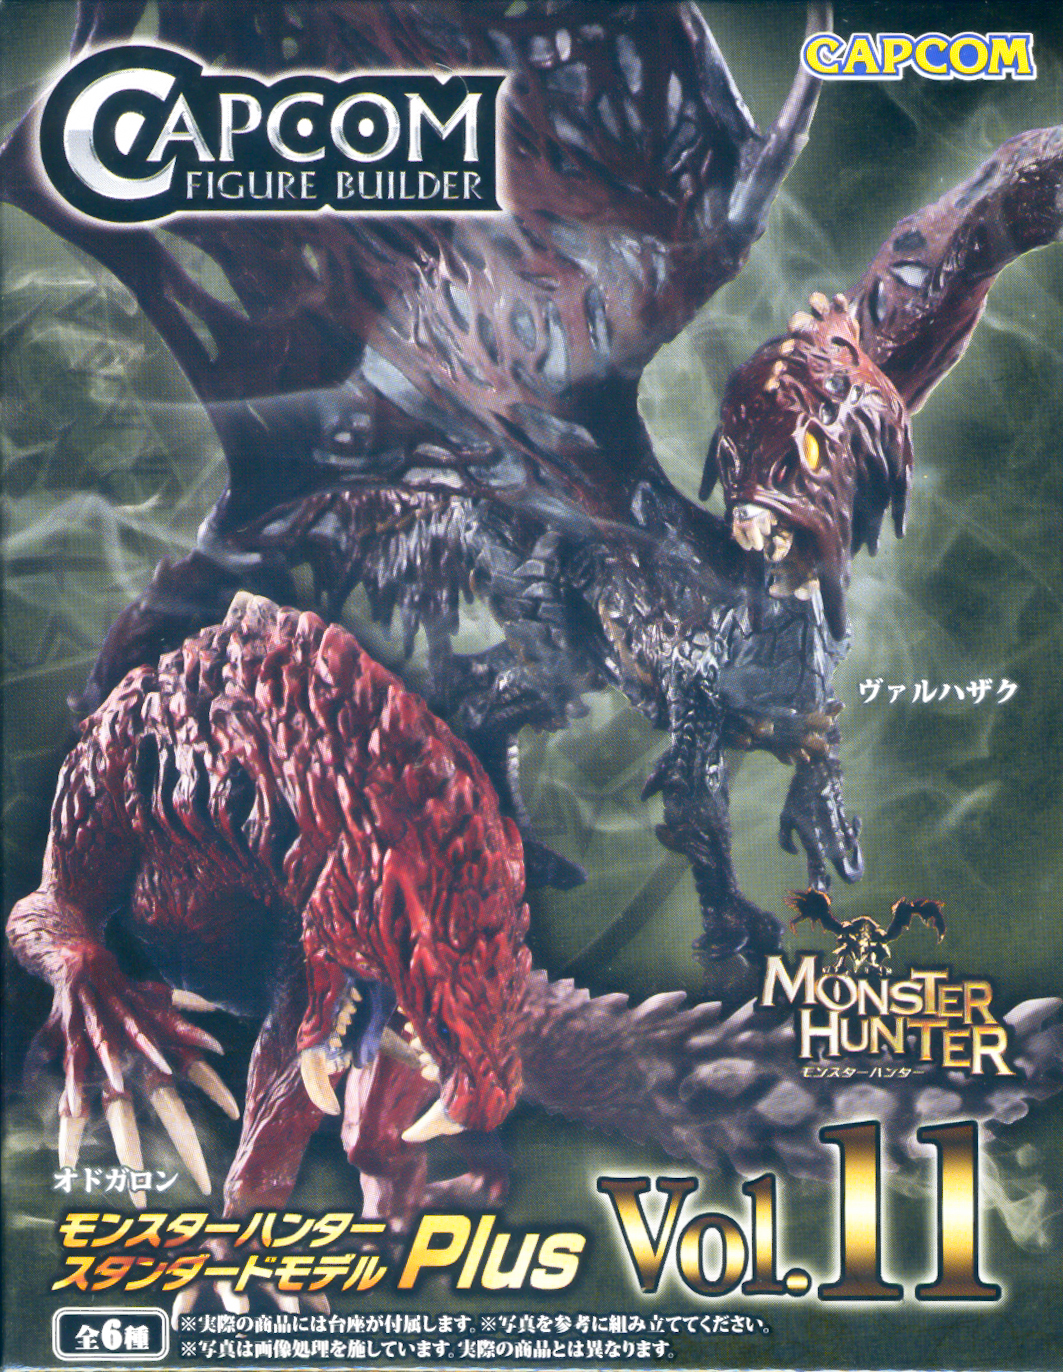 Monster Hunter Blind Box Trading Figure Vol. 11 Capcom Japan